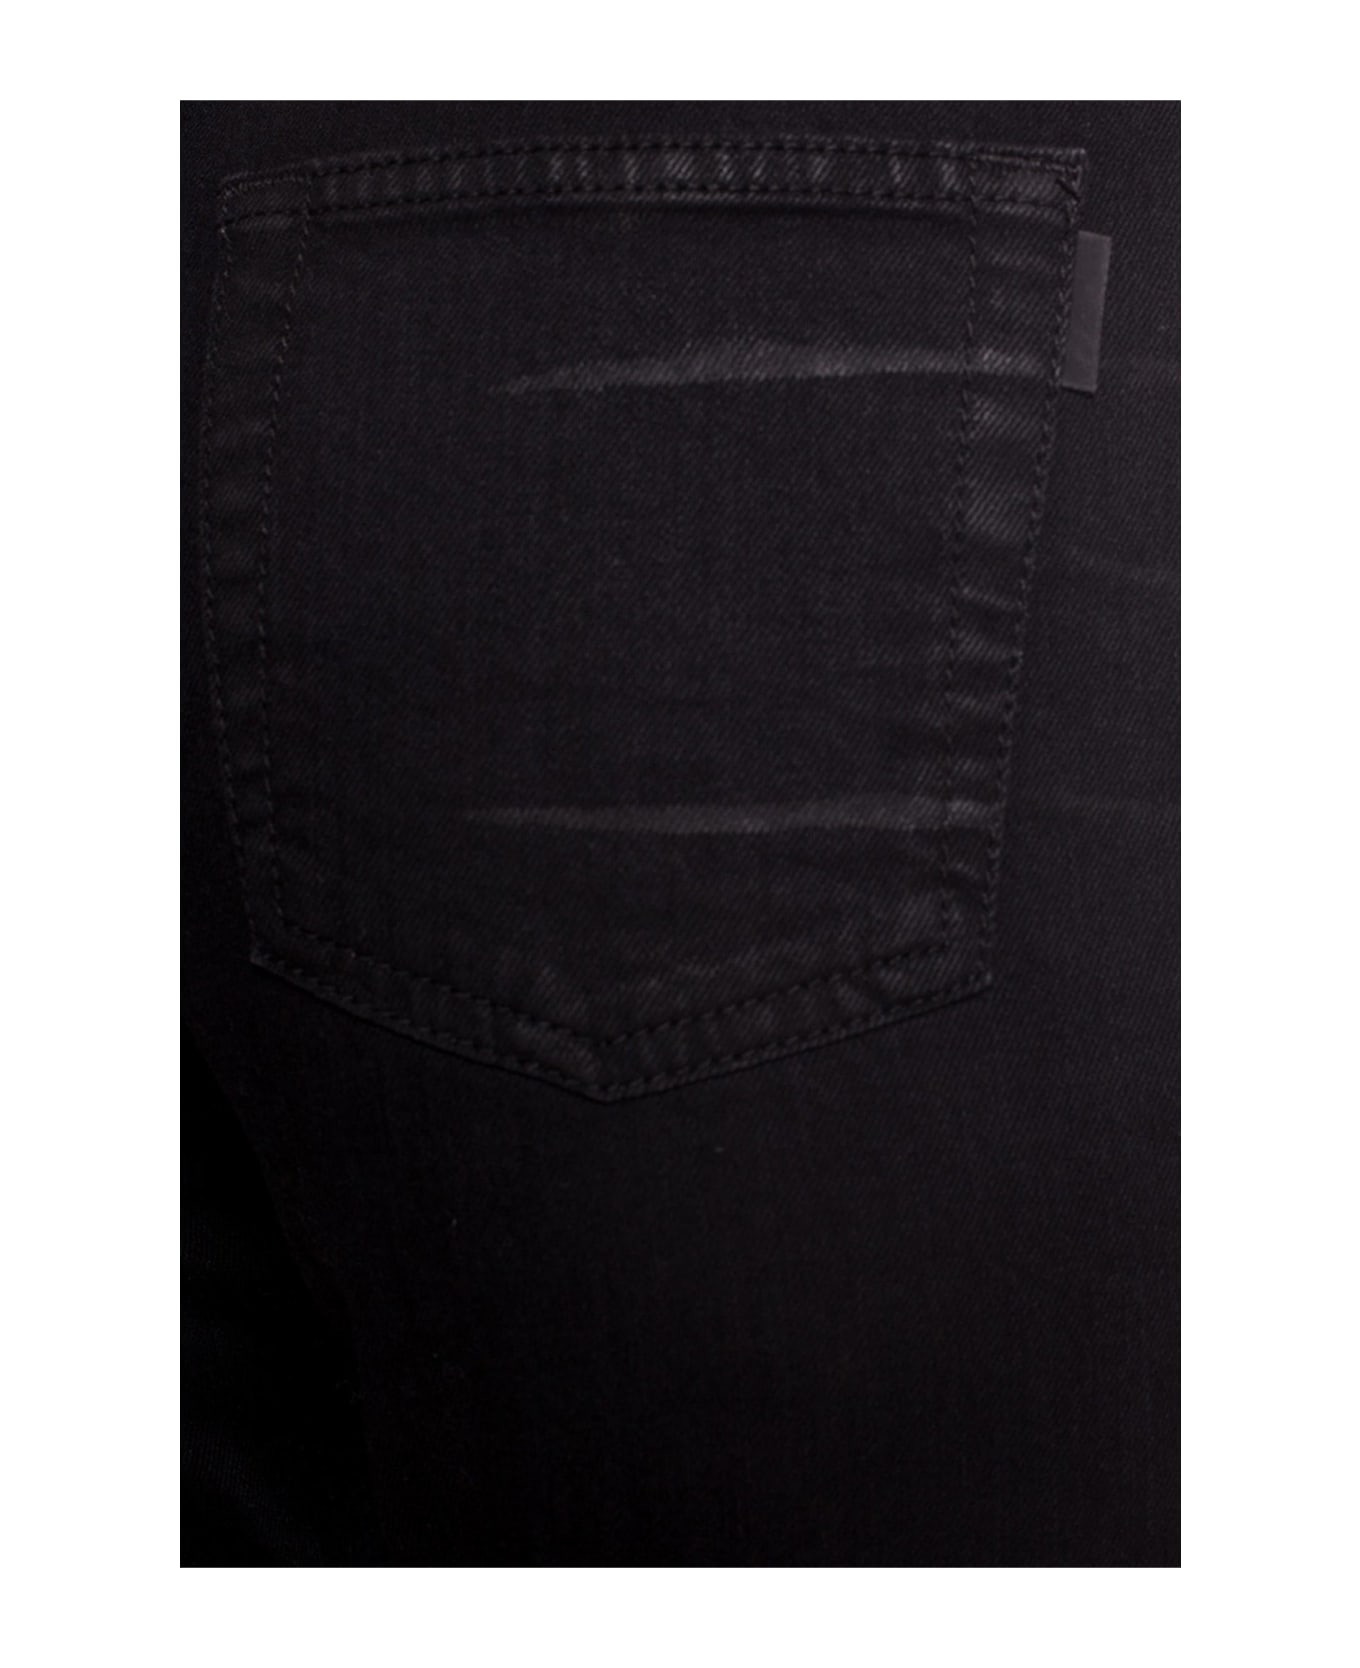 Saint Laurent Distressed Denim Jeans - Black デニム